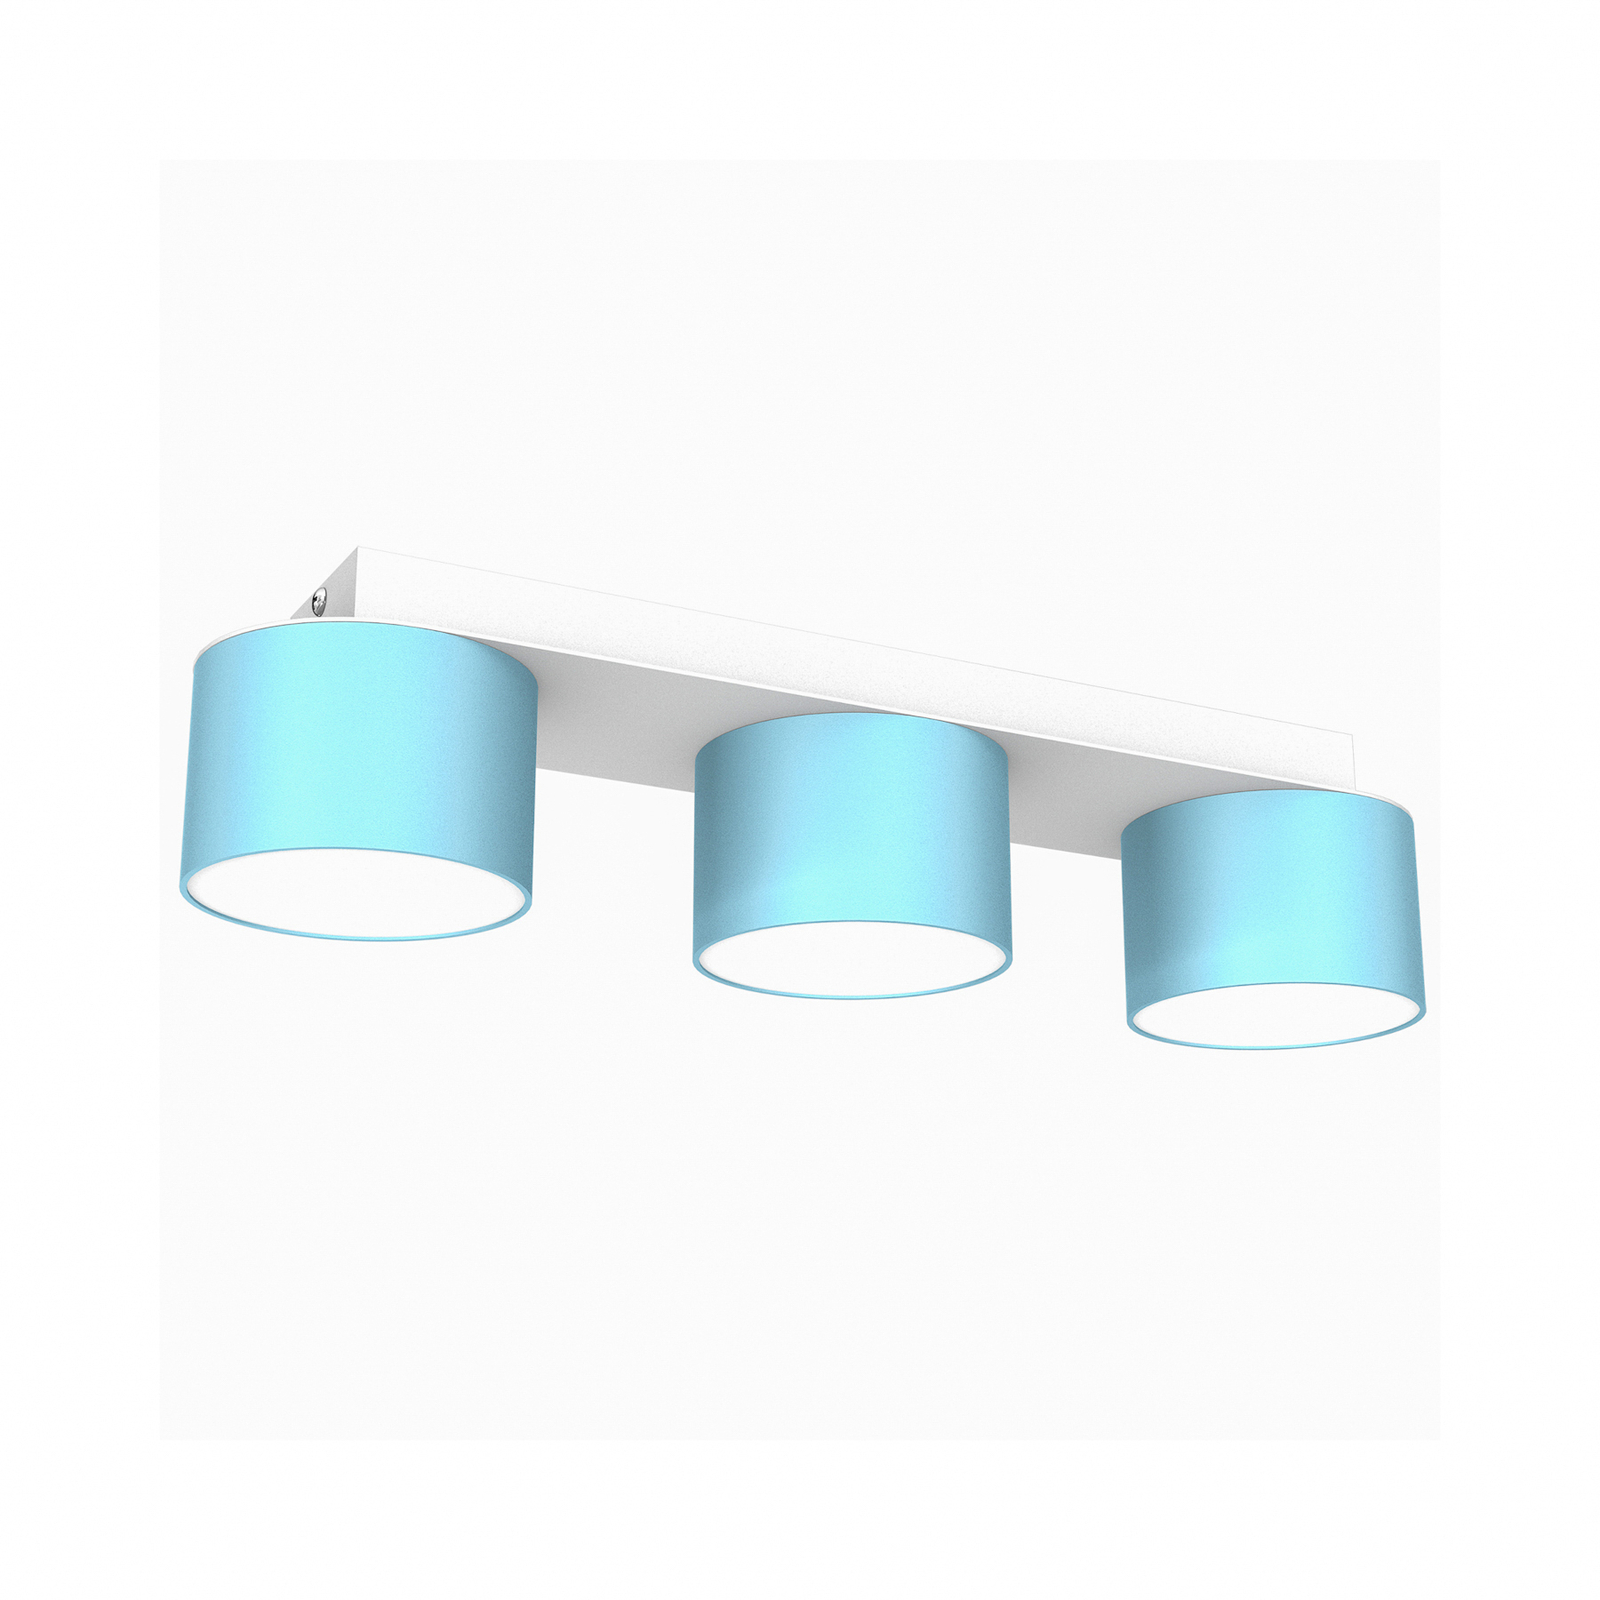 Plafondlamp Cloudy balken 3-lamps blauw